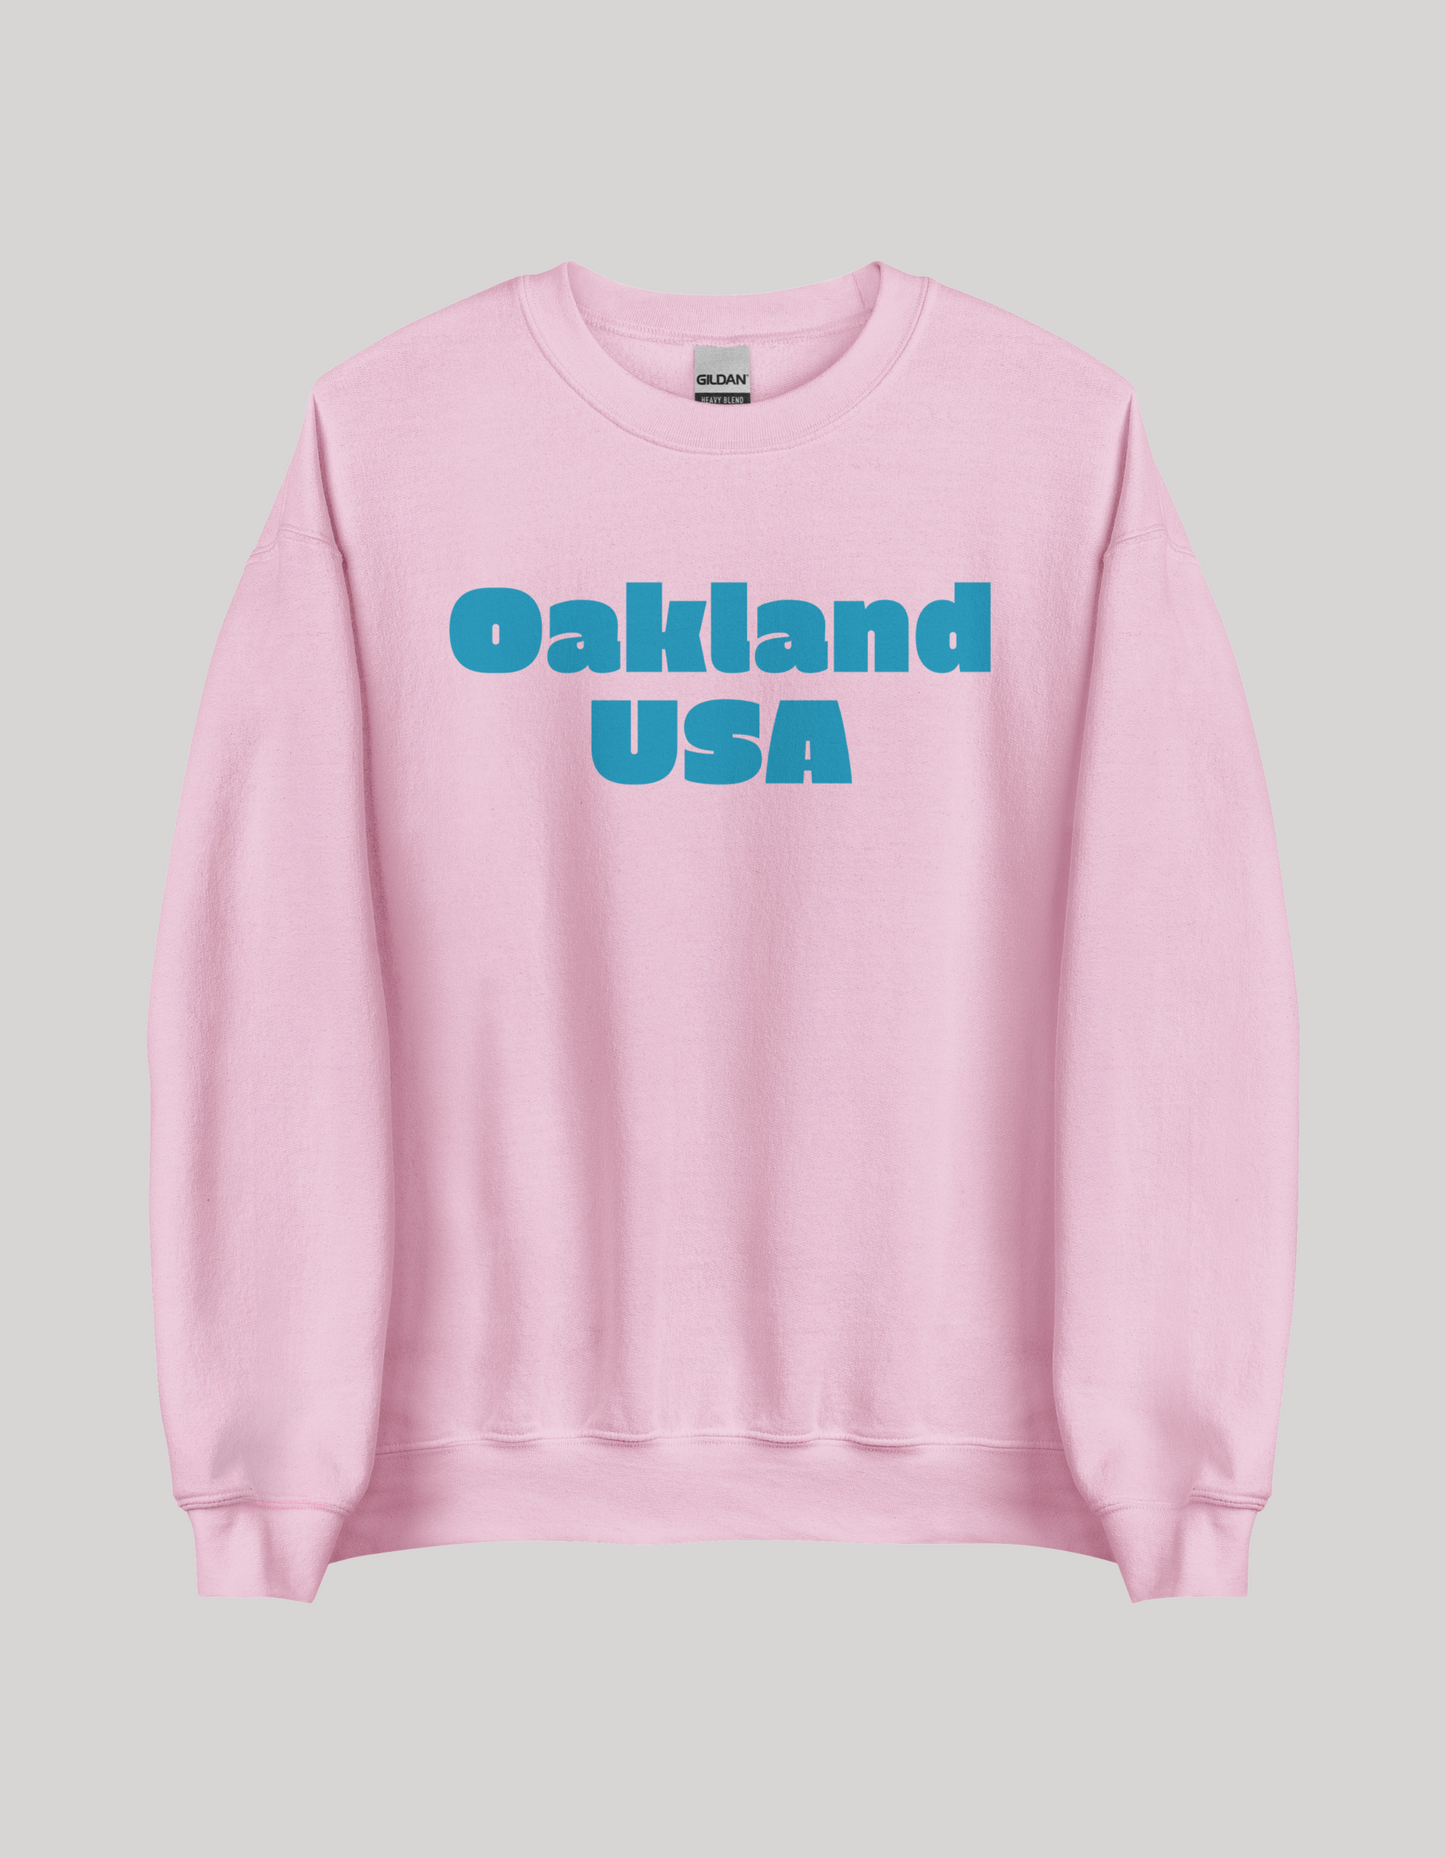 Unisex Sweatshirt Oakland USA